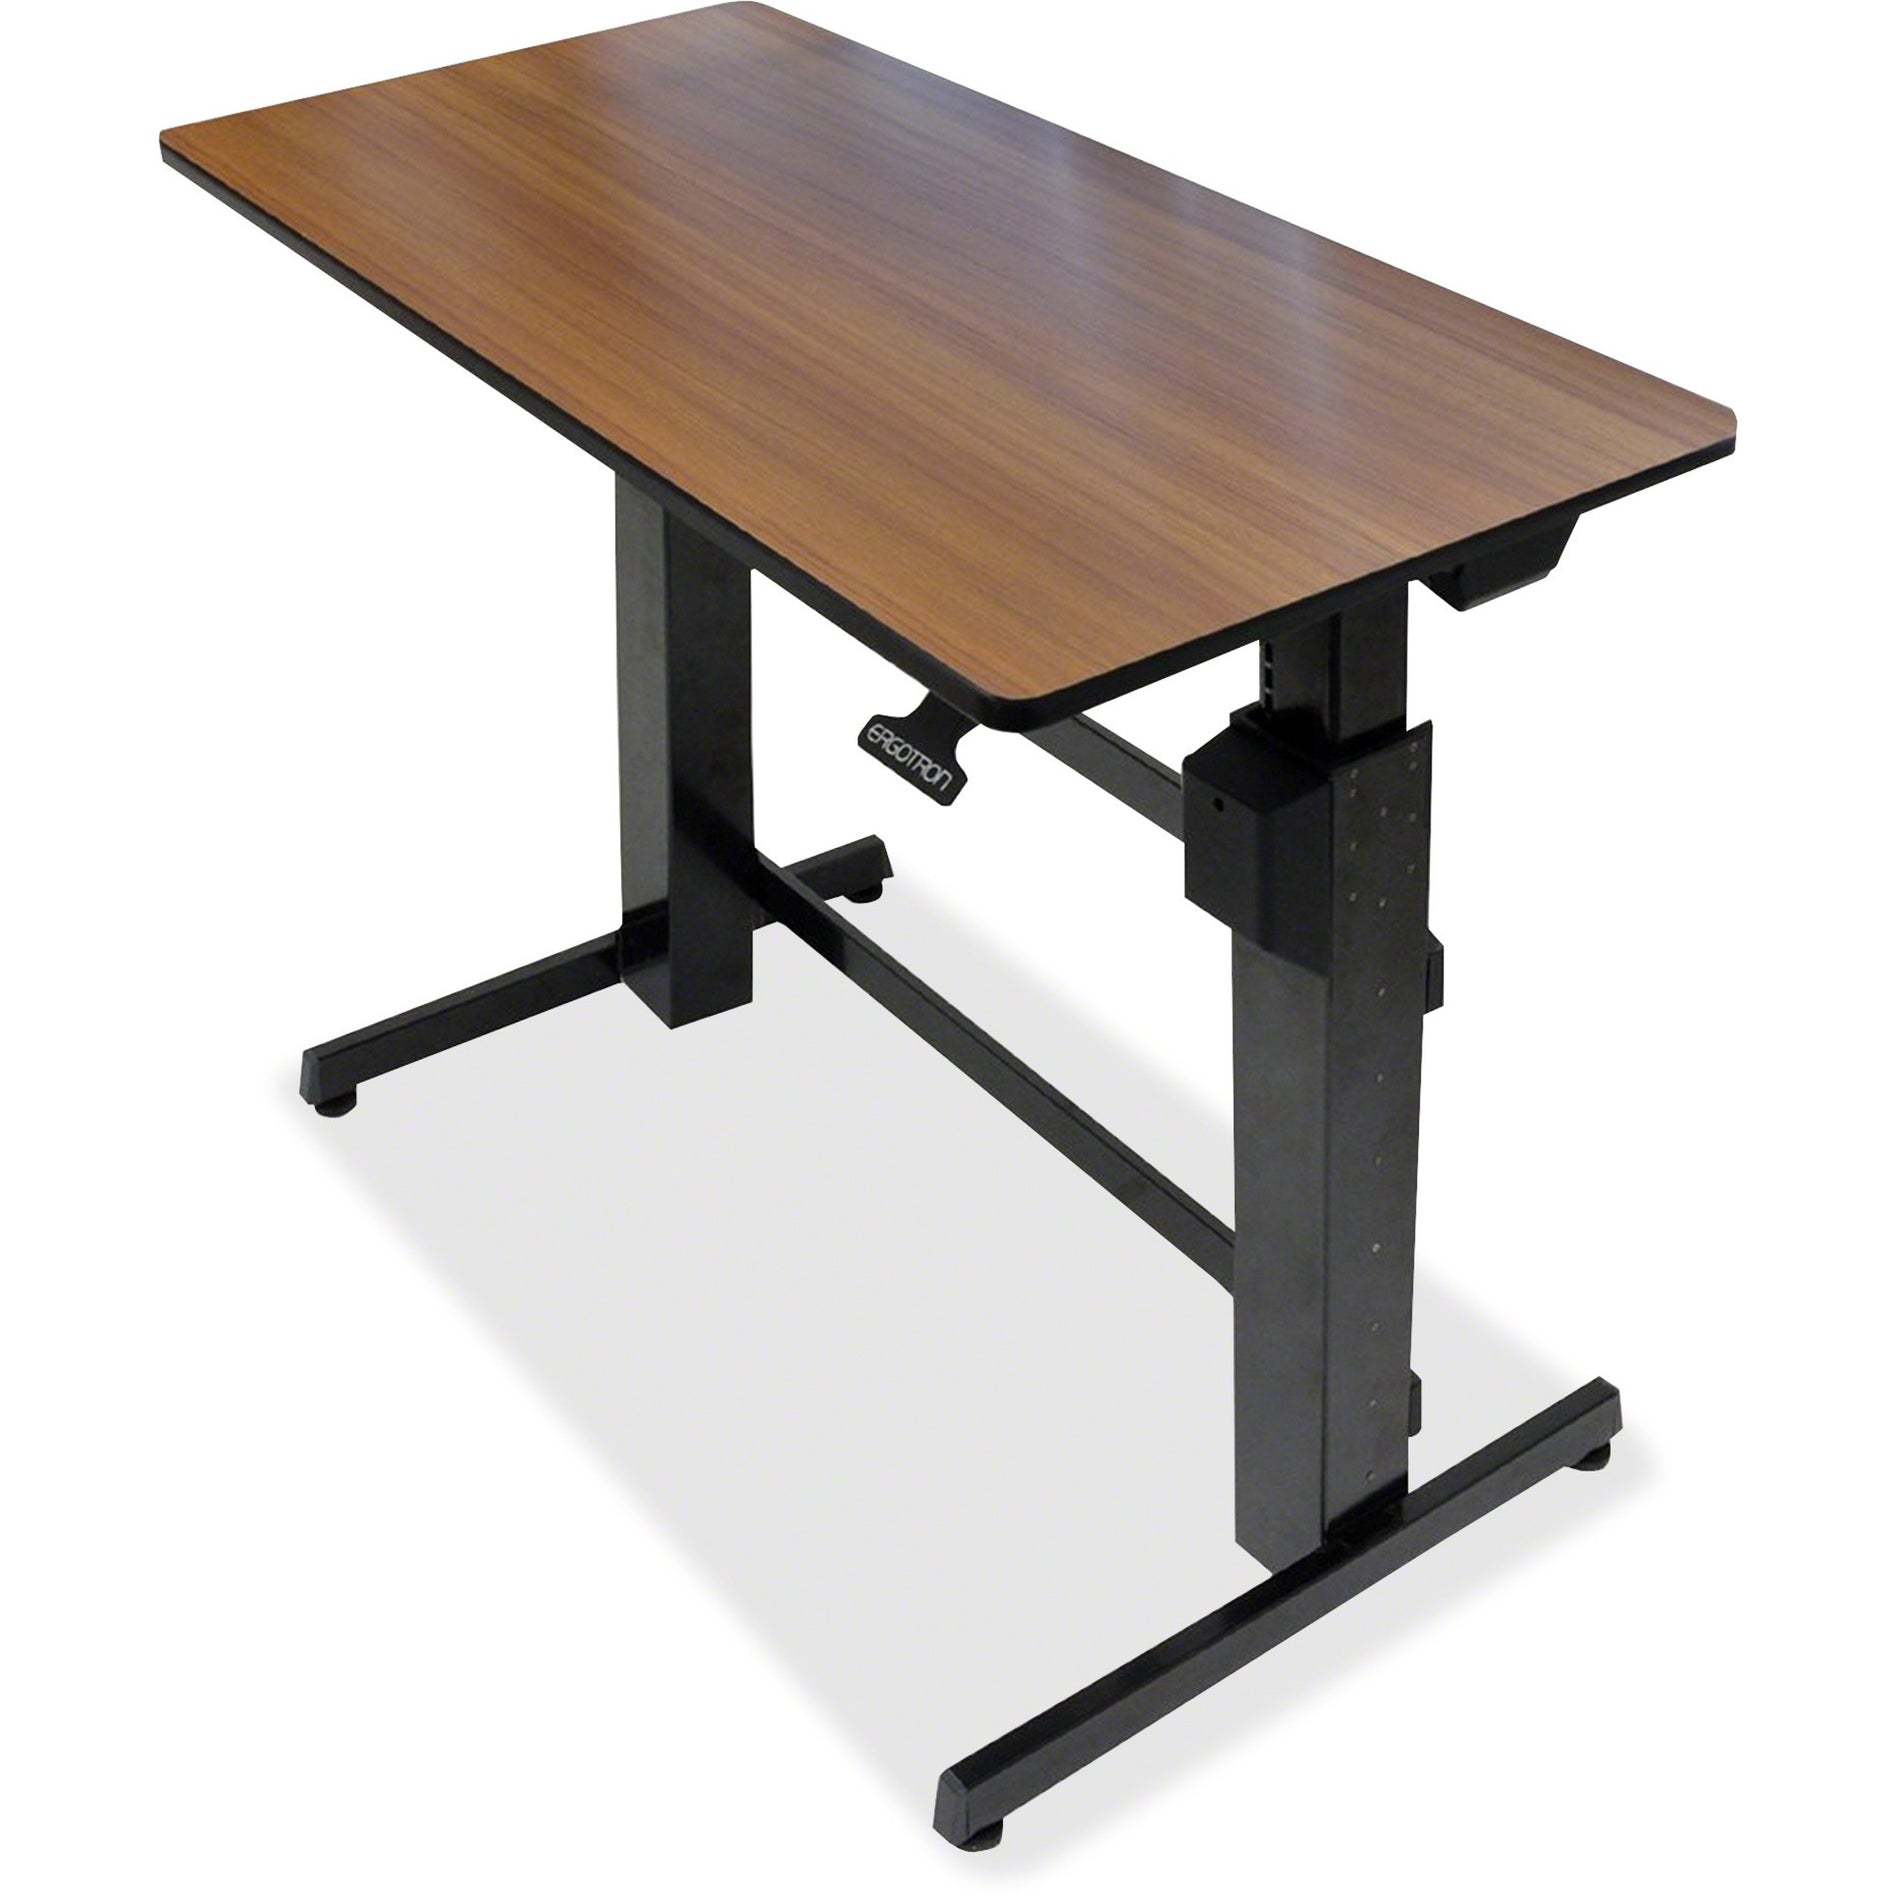 Ergotron 24-271-927 WorkFit-D Sit-Stand Desk (Walnut Surface), Durable, Leveling Glide, 65 lb Maximum Load Capacity